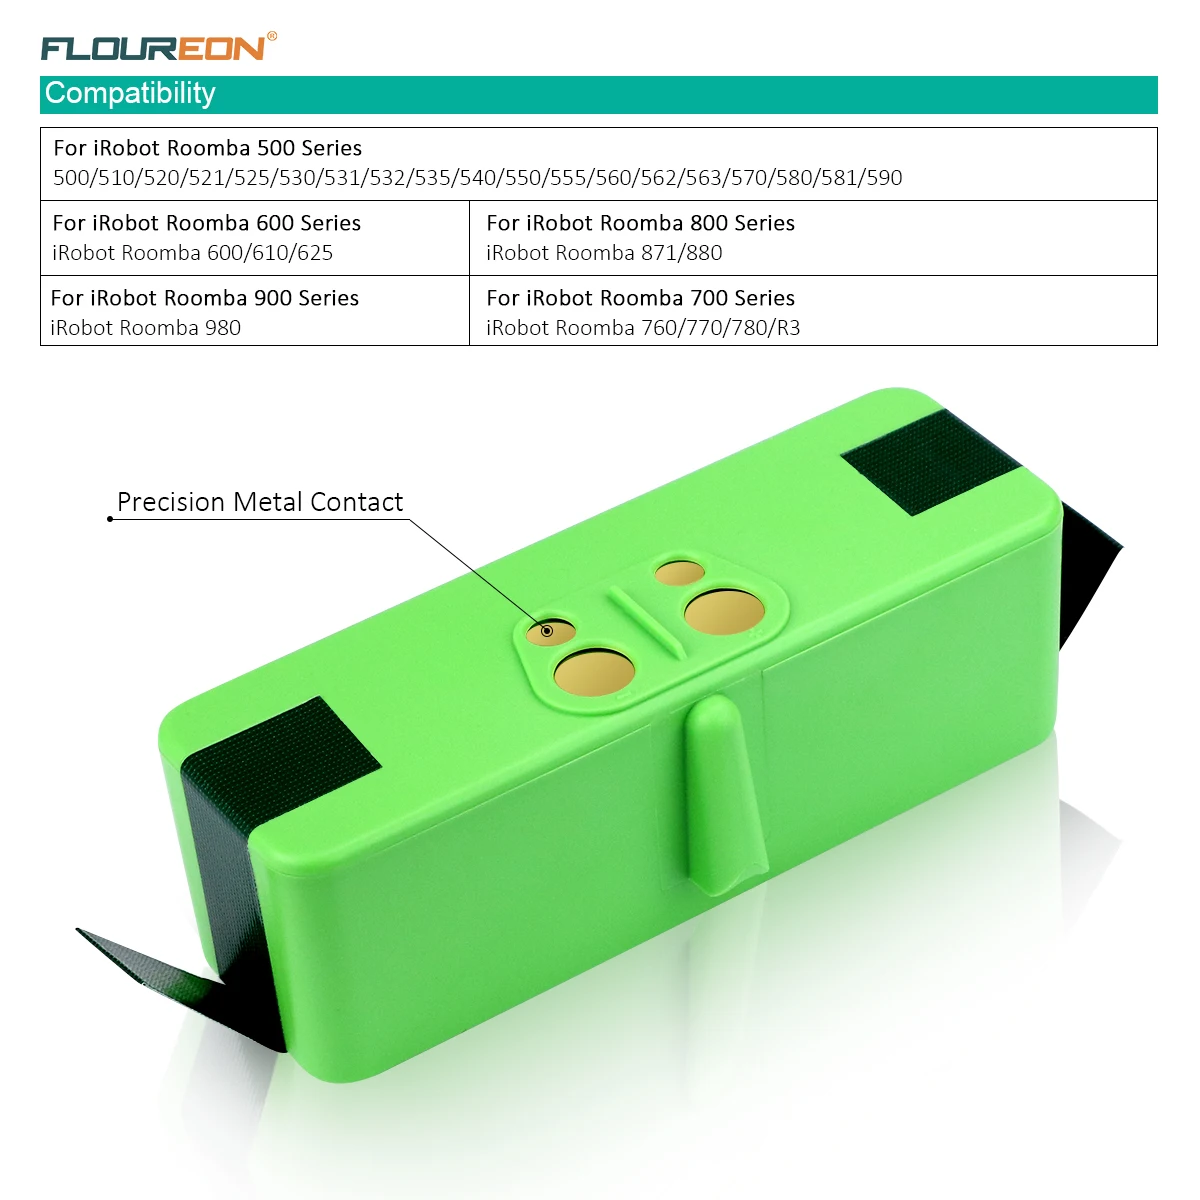 Floureon 14,8 V 5300mAh литий-ионный аккумулятор совместимый для IRobot Roomba 500 600 700 800 980 серии